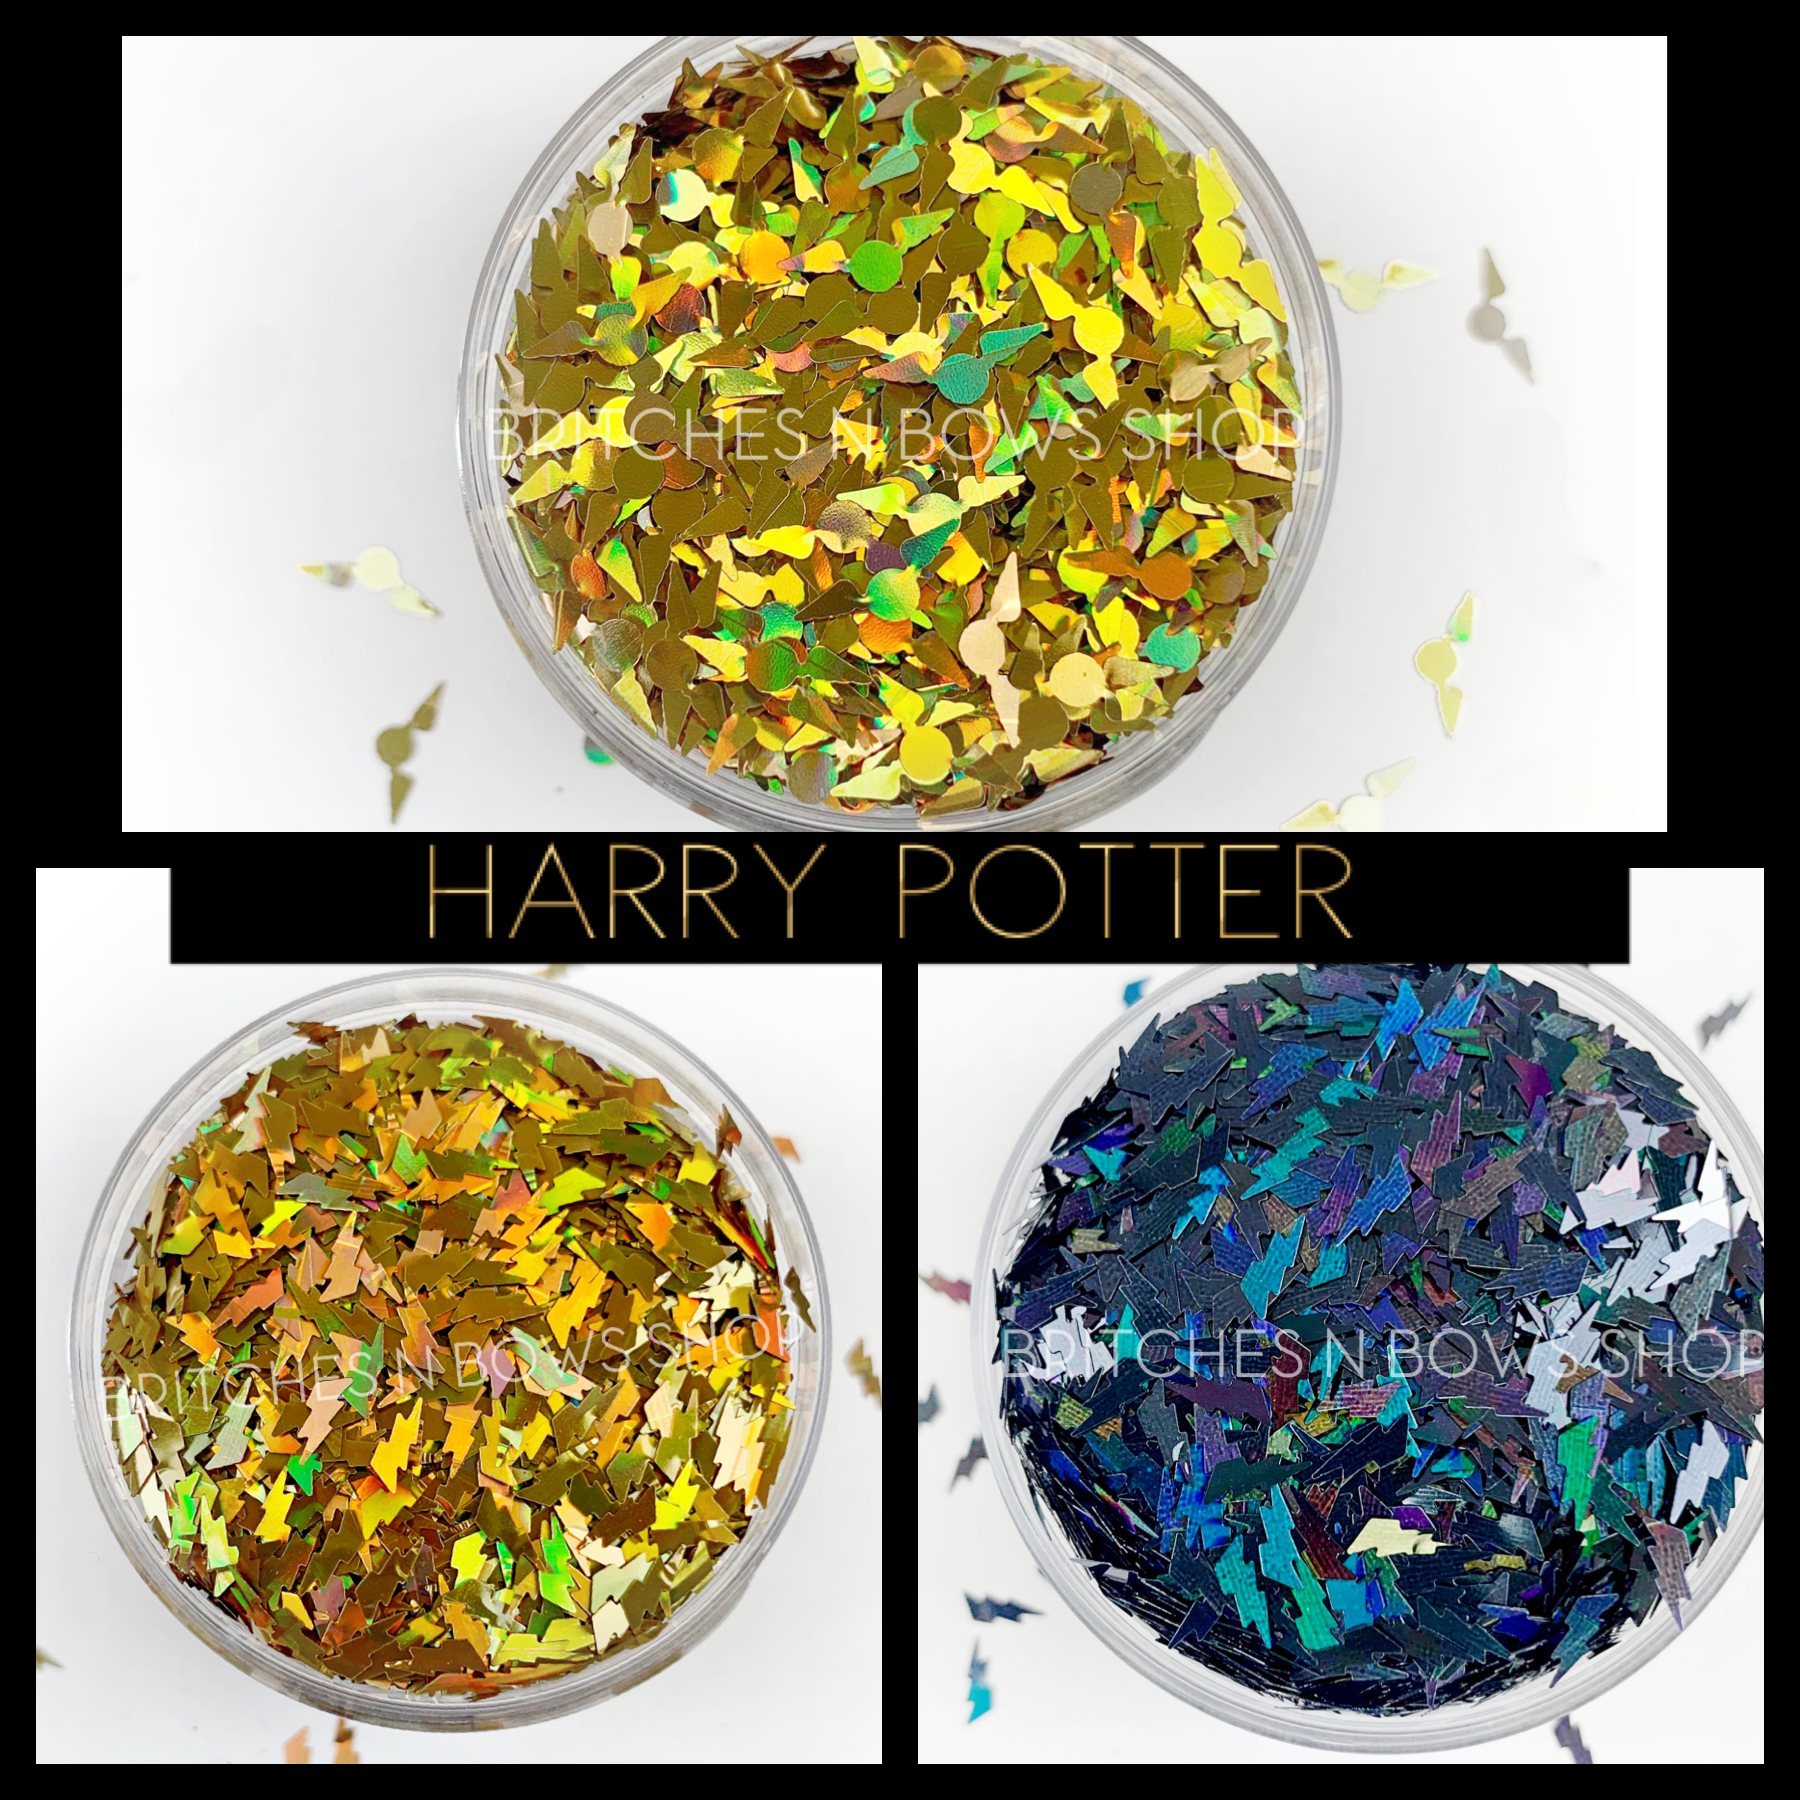 Harry Potter inspired shape confetti glitter